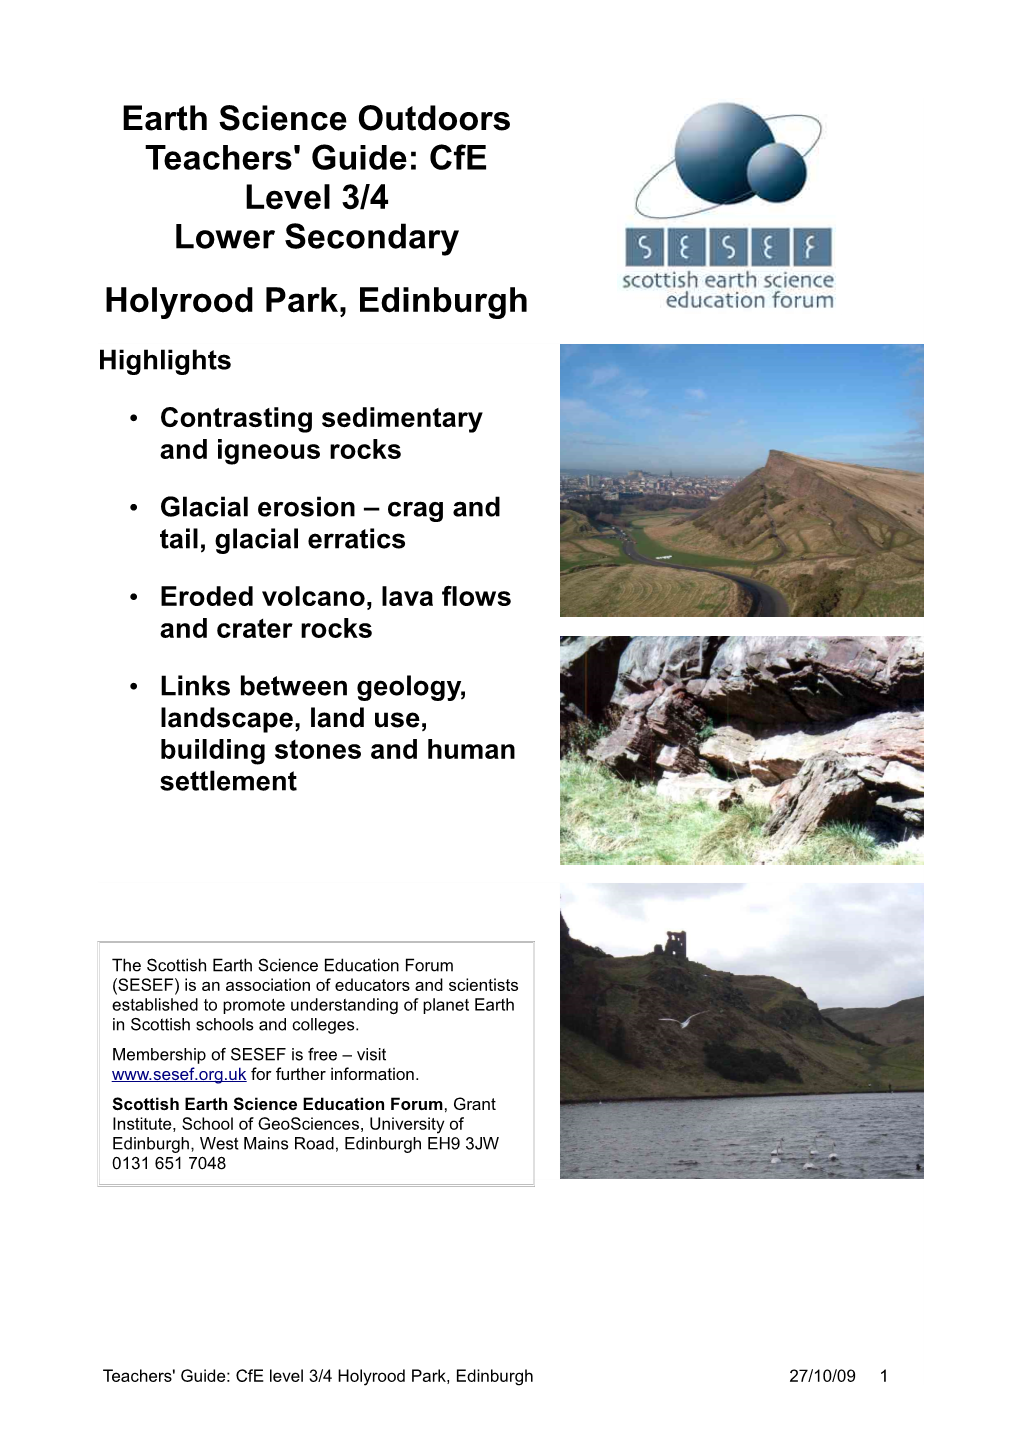 Earth Science Outdoors Teachers' Guide: Cfe Level 3/4 Lower Secondary Holyrood Park, Edinburgh